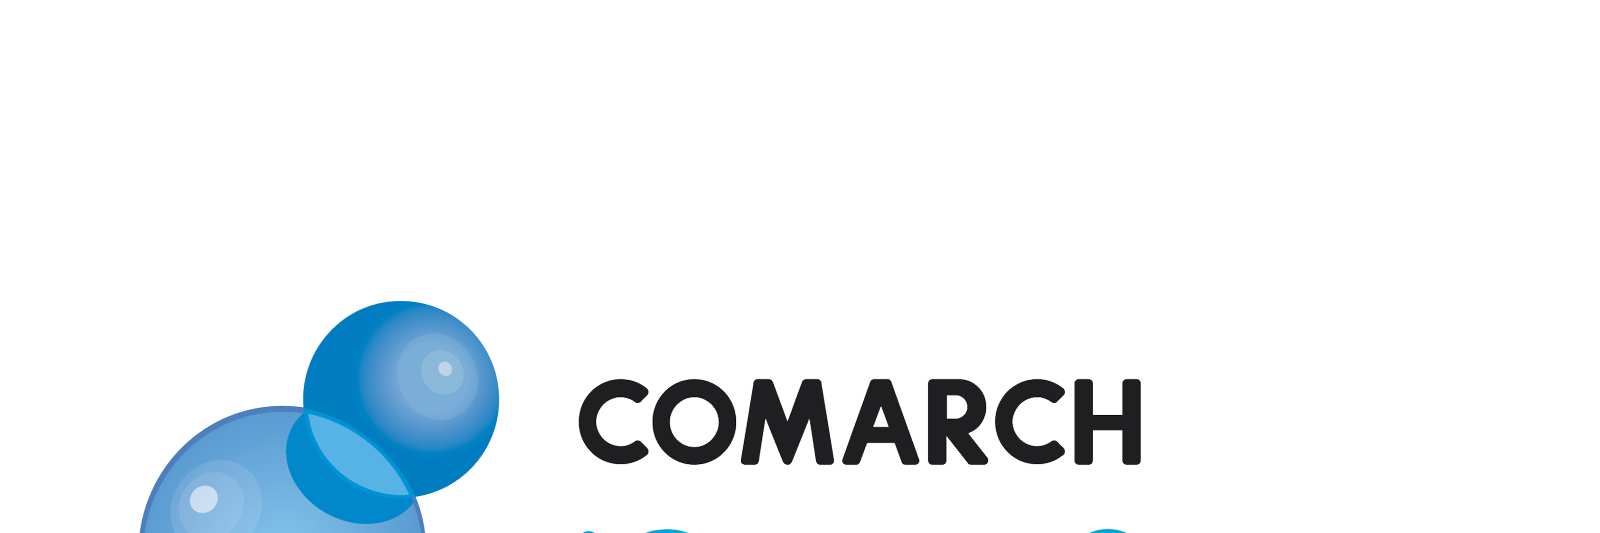 System Comarch OPT!MA v. 2012 Moduł Comarch isklep24 6.